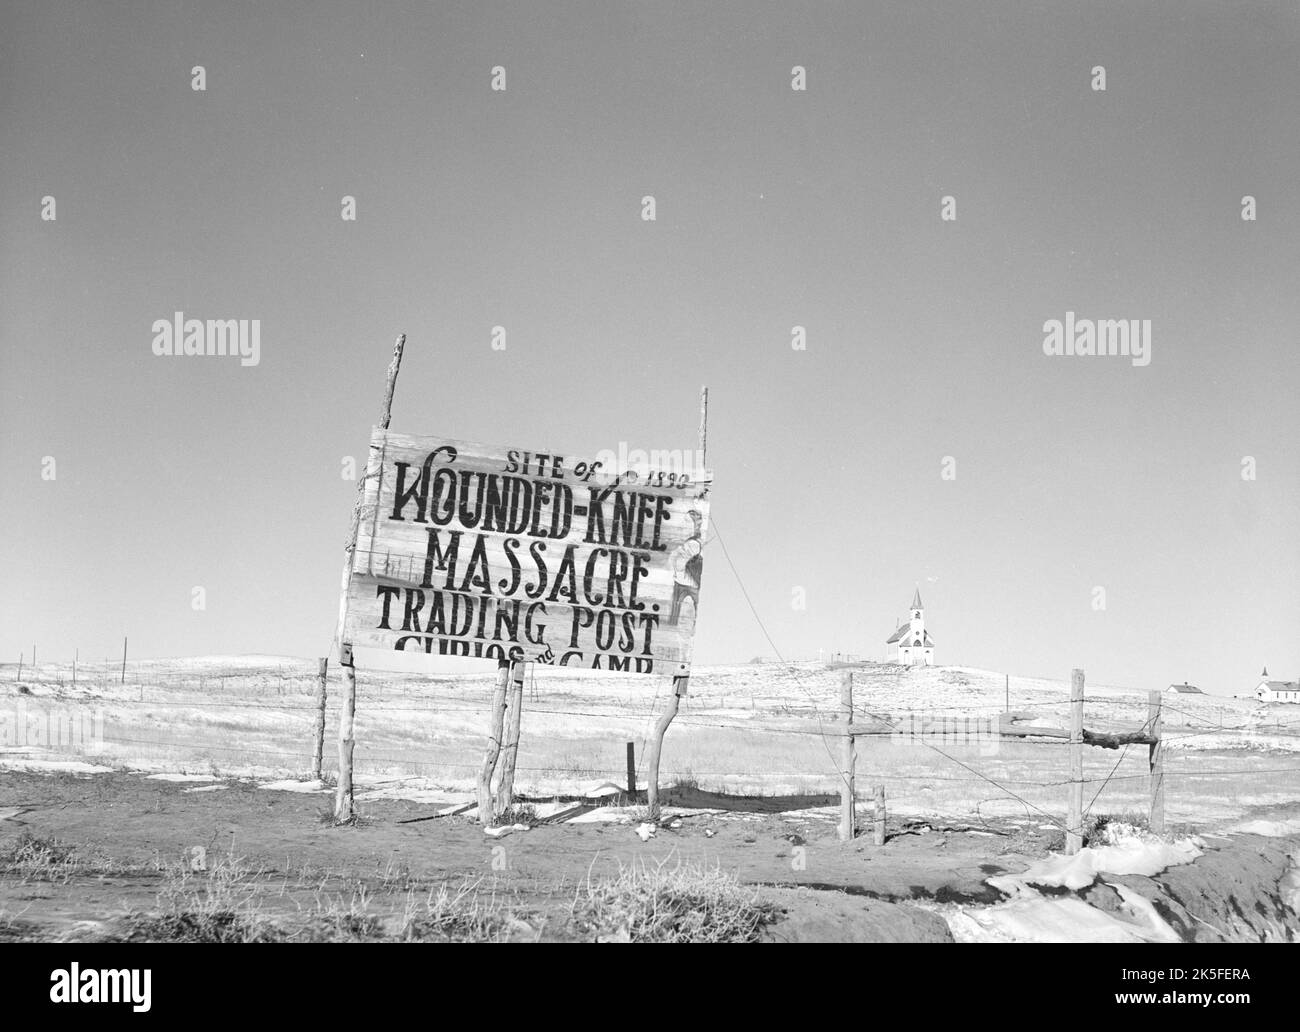 John Vachon - Wounded Knee Massacre Trading Post Signage and Sacred Heart Catholic Church at Wounded Knee, South Dakota - c1940 Stock Photo